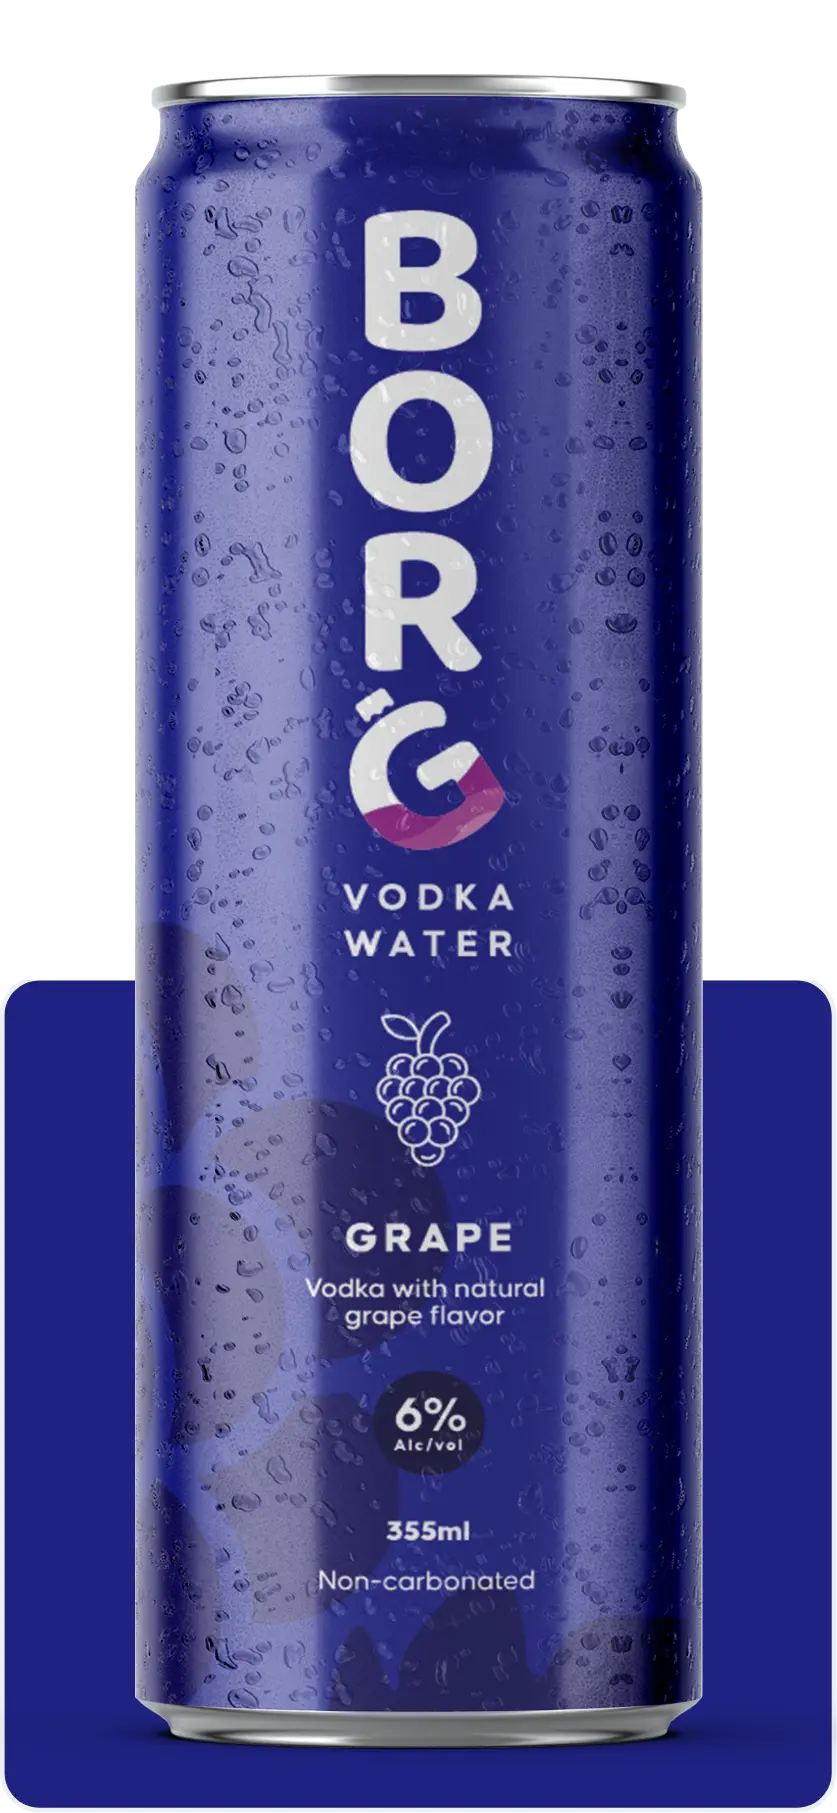 Borg Vodka Water - Grape Natural